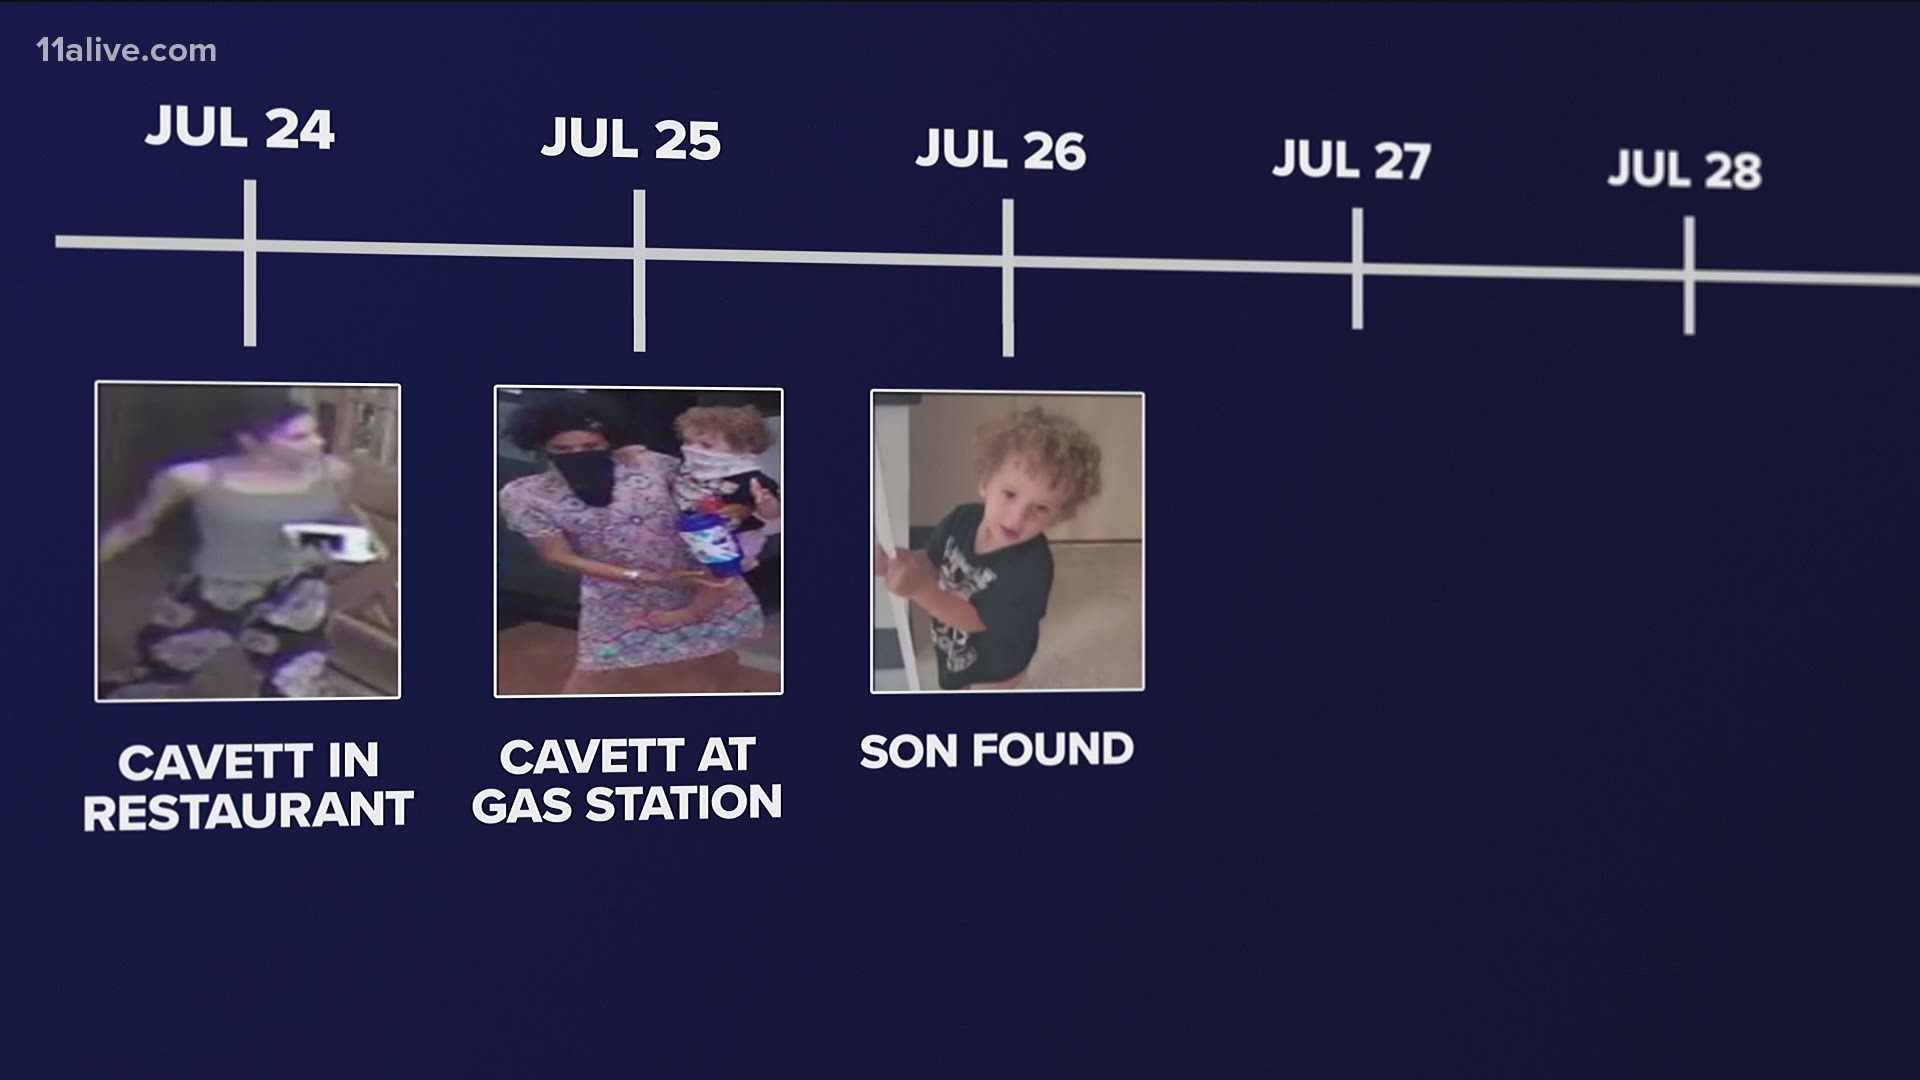 Cavett was last seen late last month.